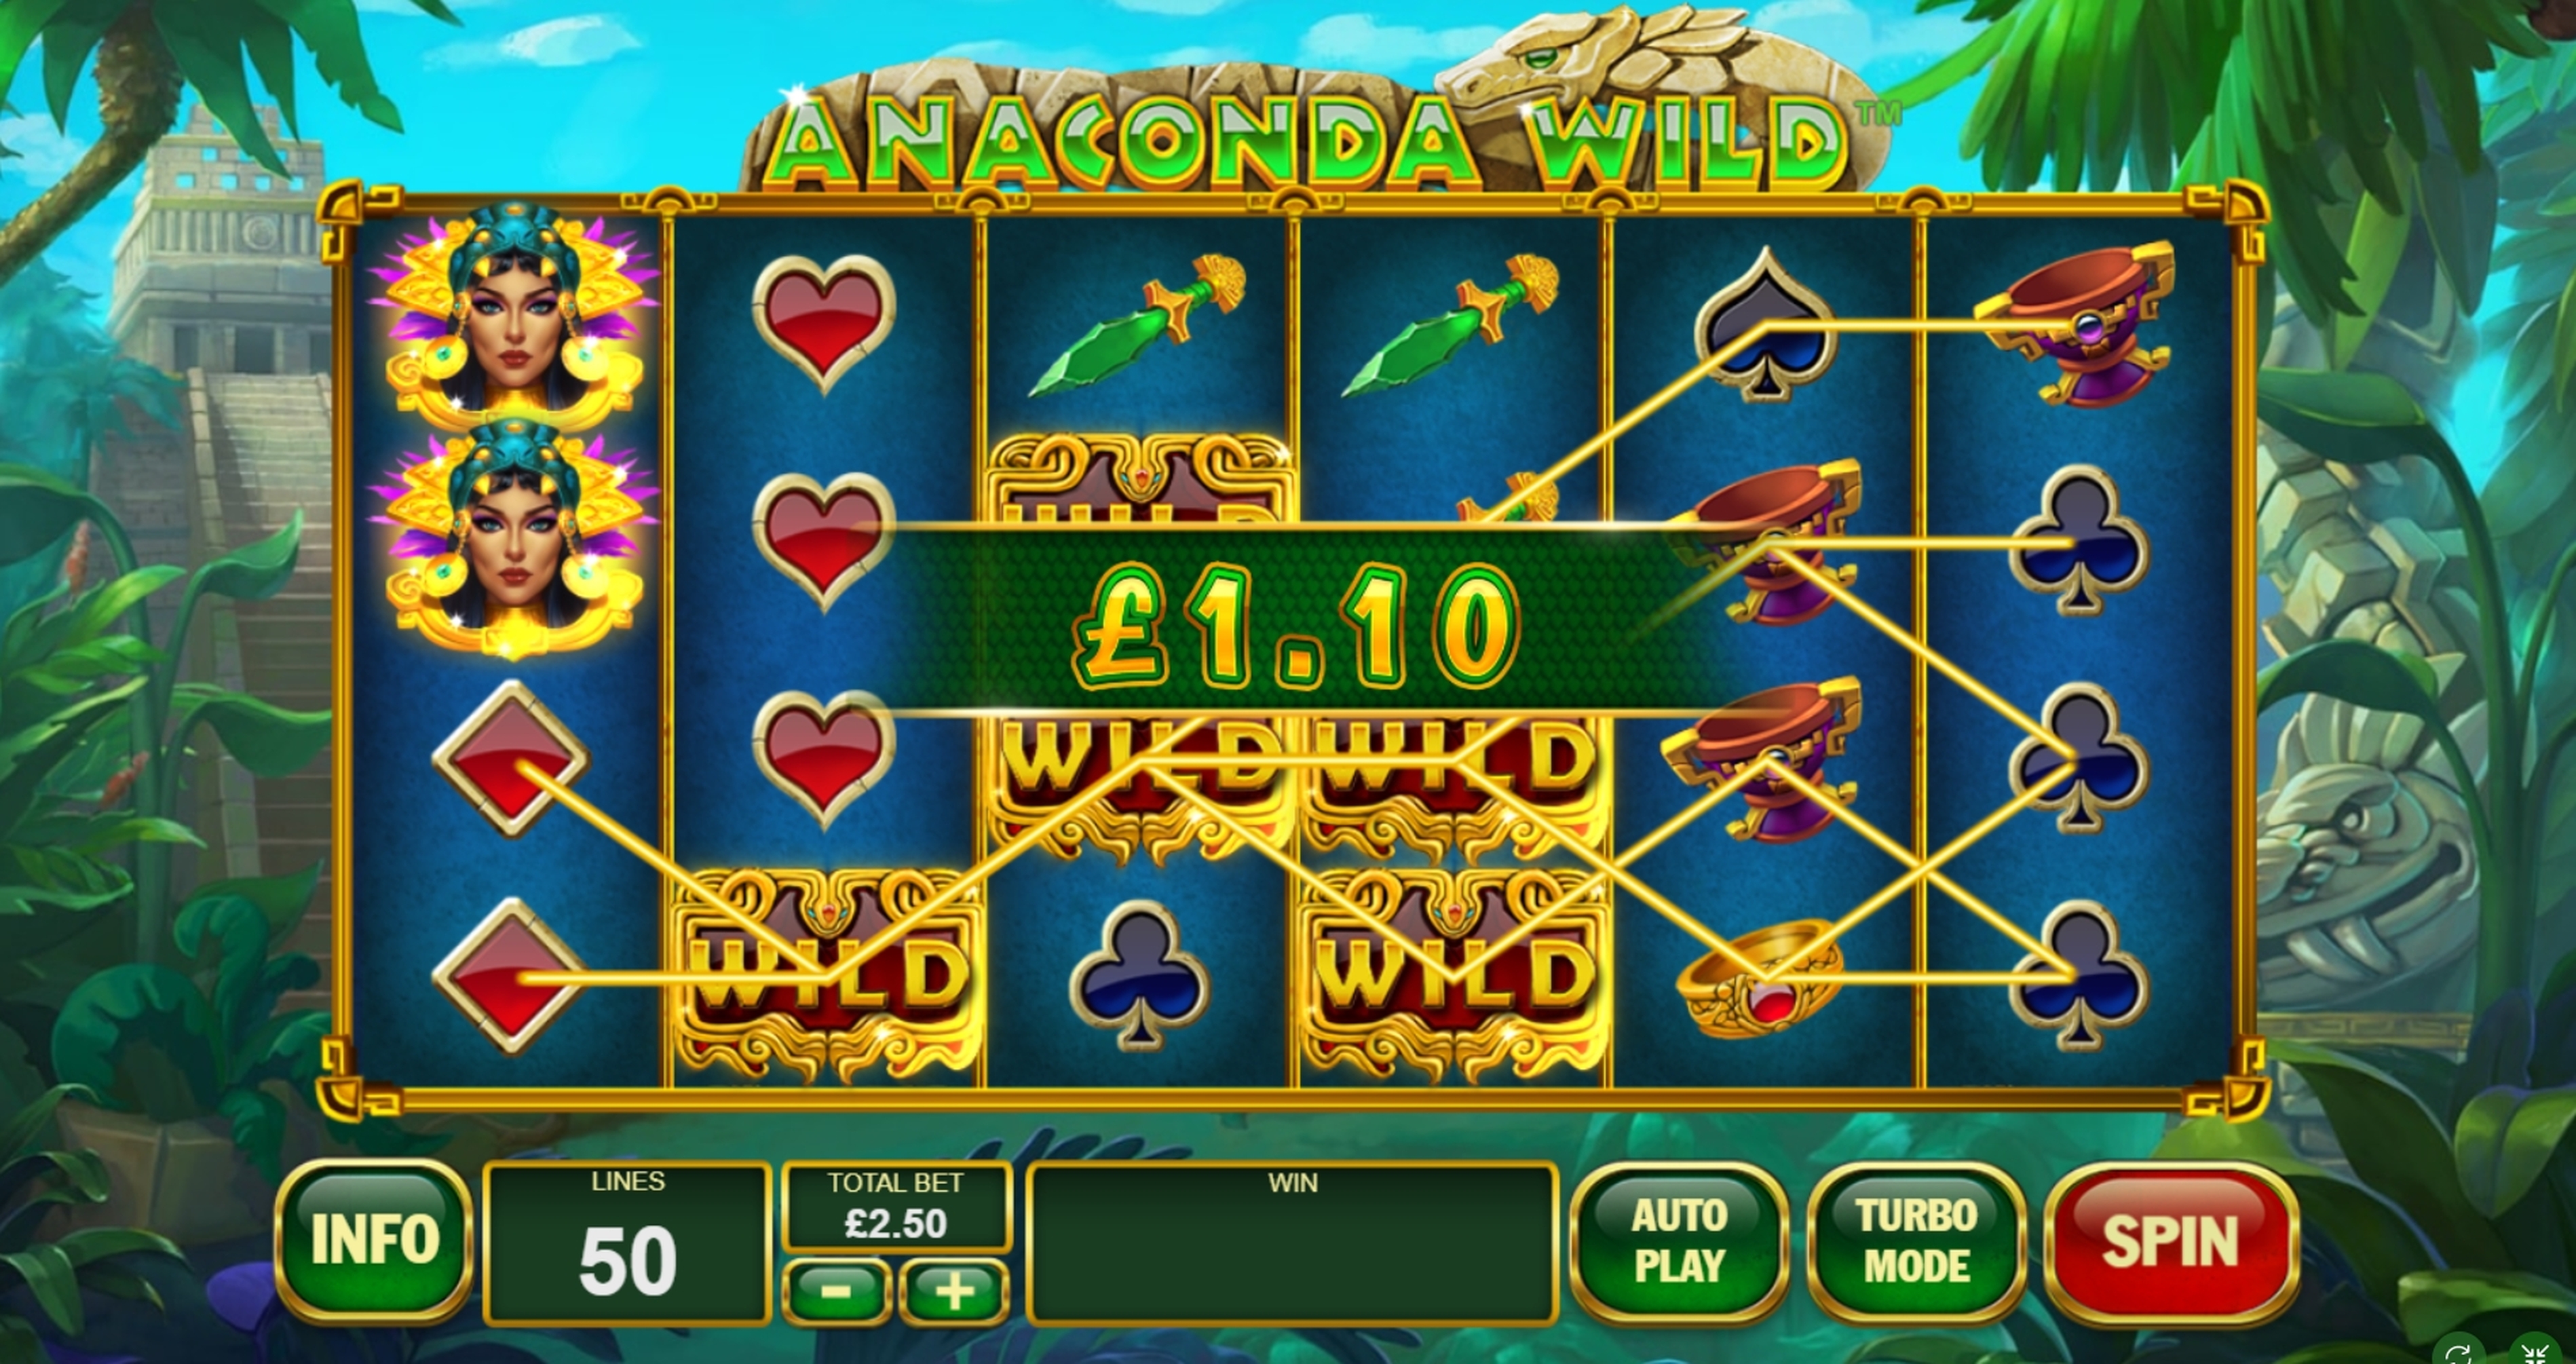 Win Money in Anaconda Wild Free Slot Game by Playtech